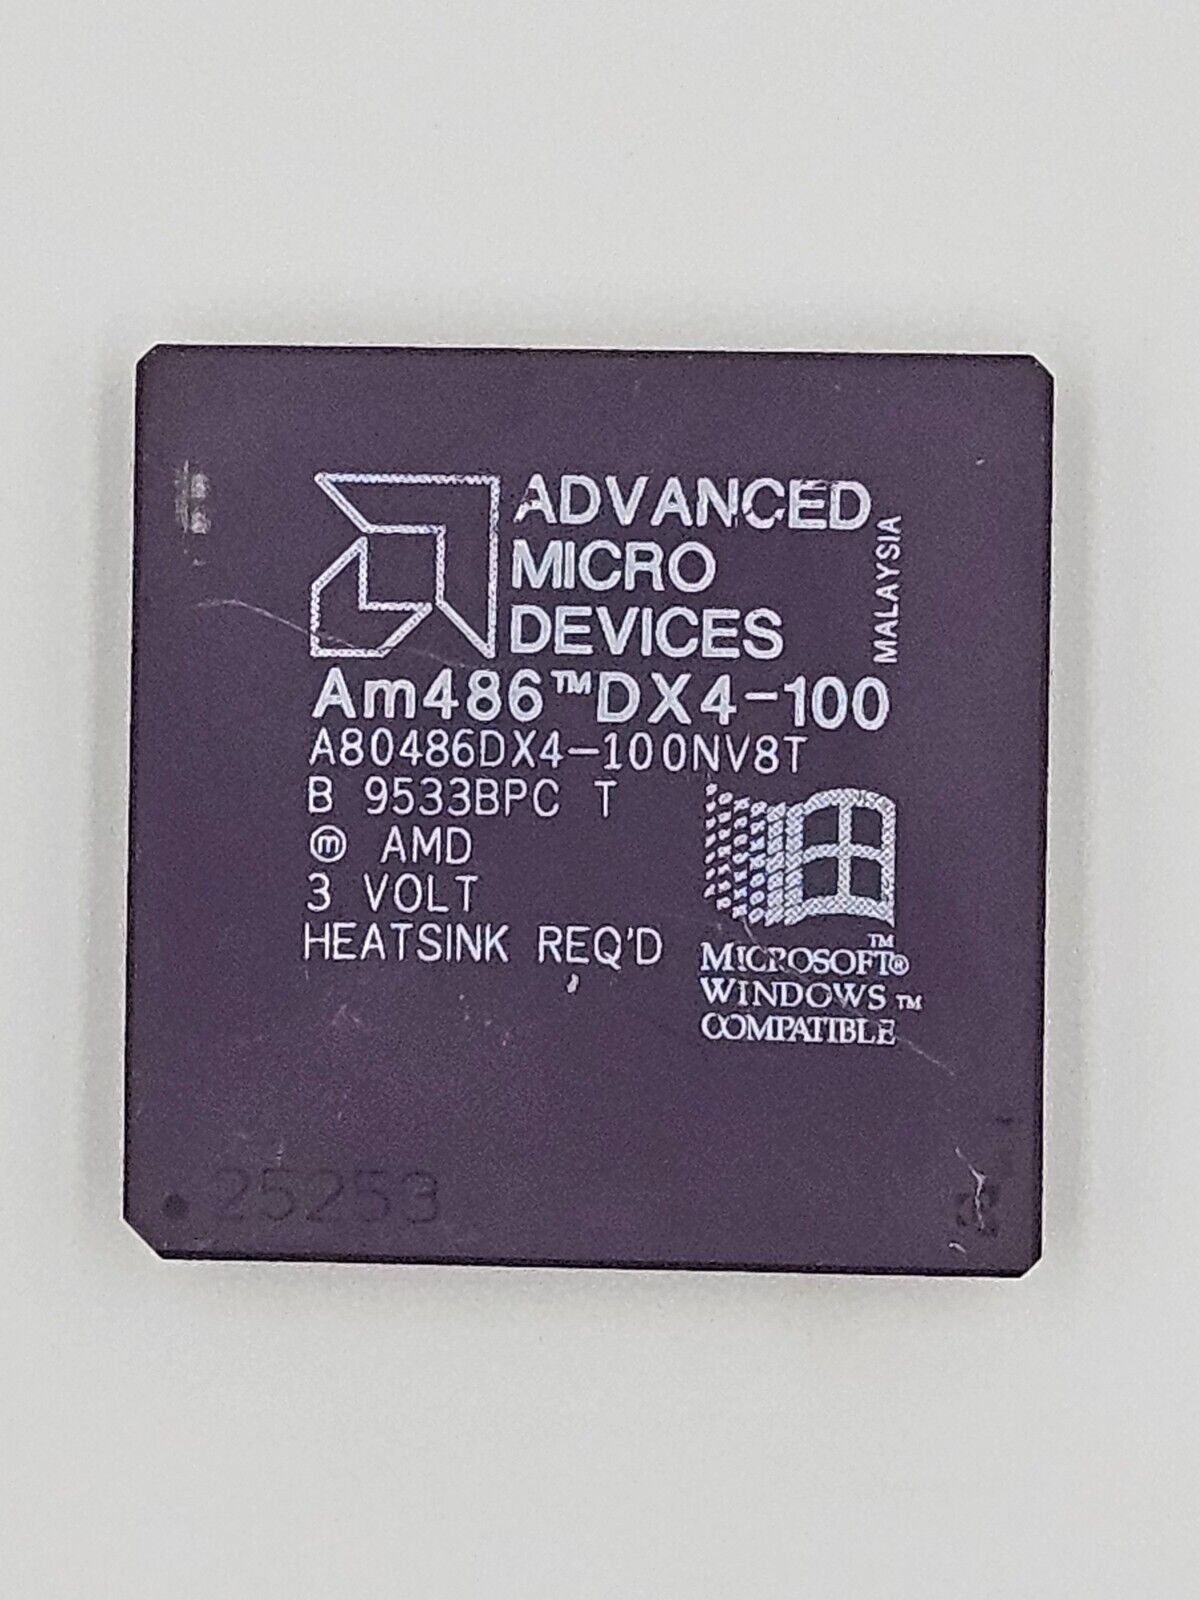 AMD A80486DX4-100NV8T Am486 DX4-100 - Socket PGA168 - 100MHz CPU